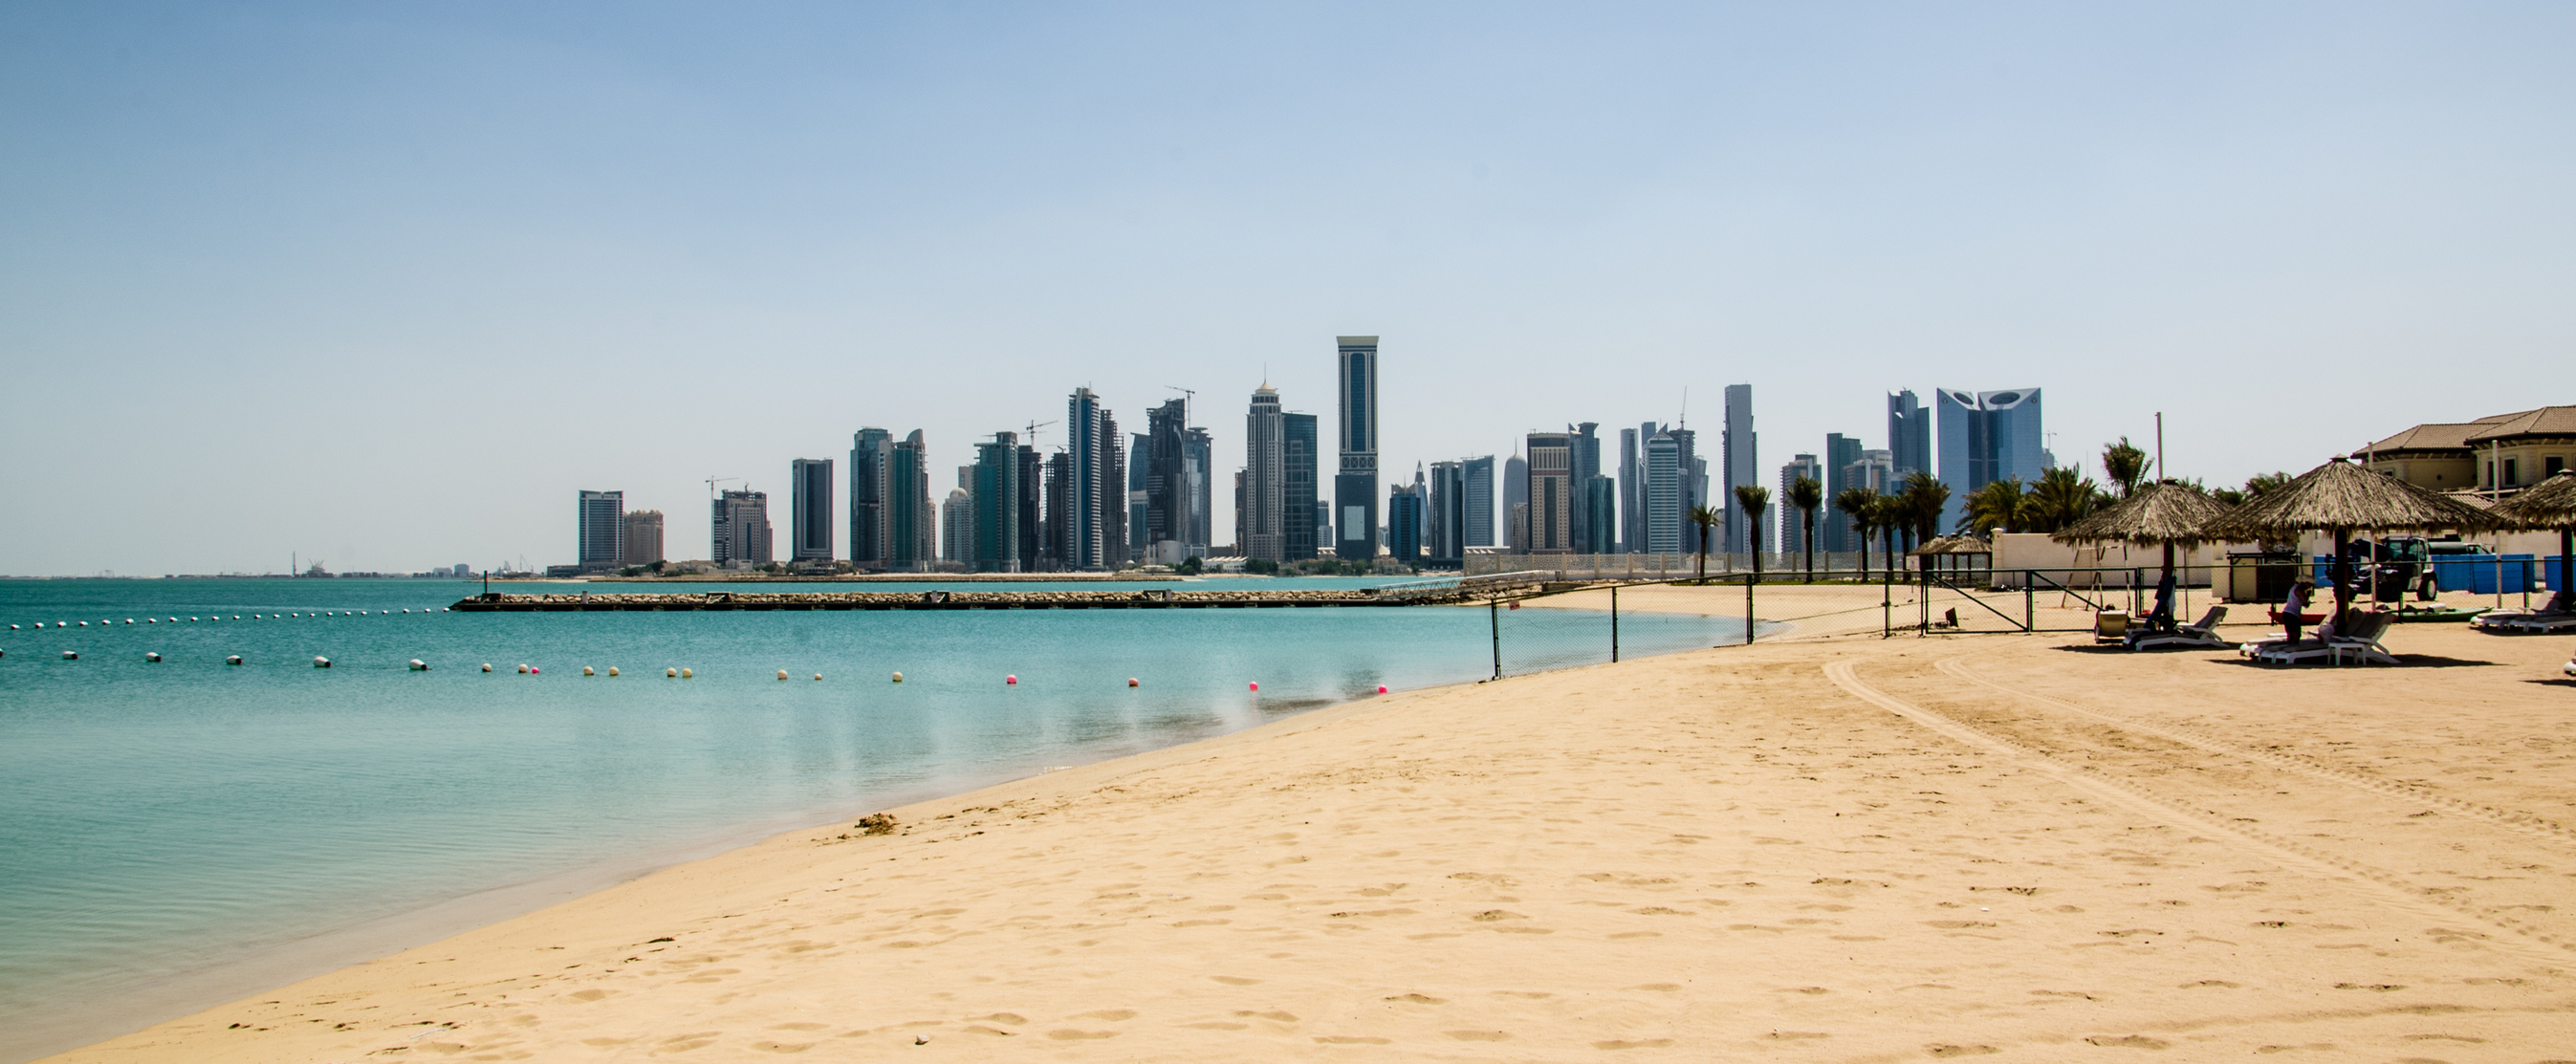 Doha-Catar-playa-rascacielos-sol-arena